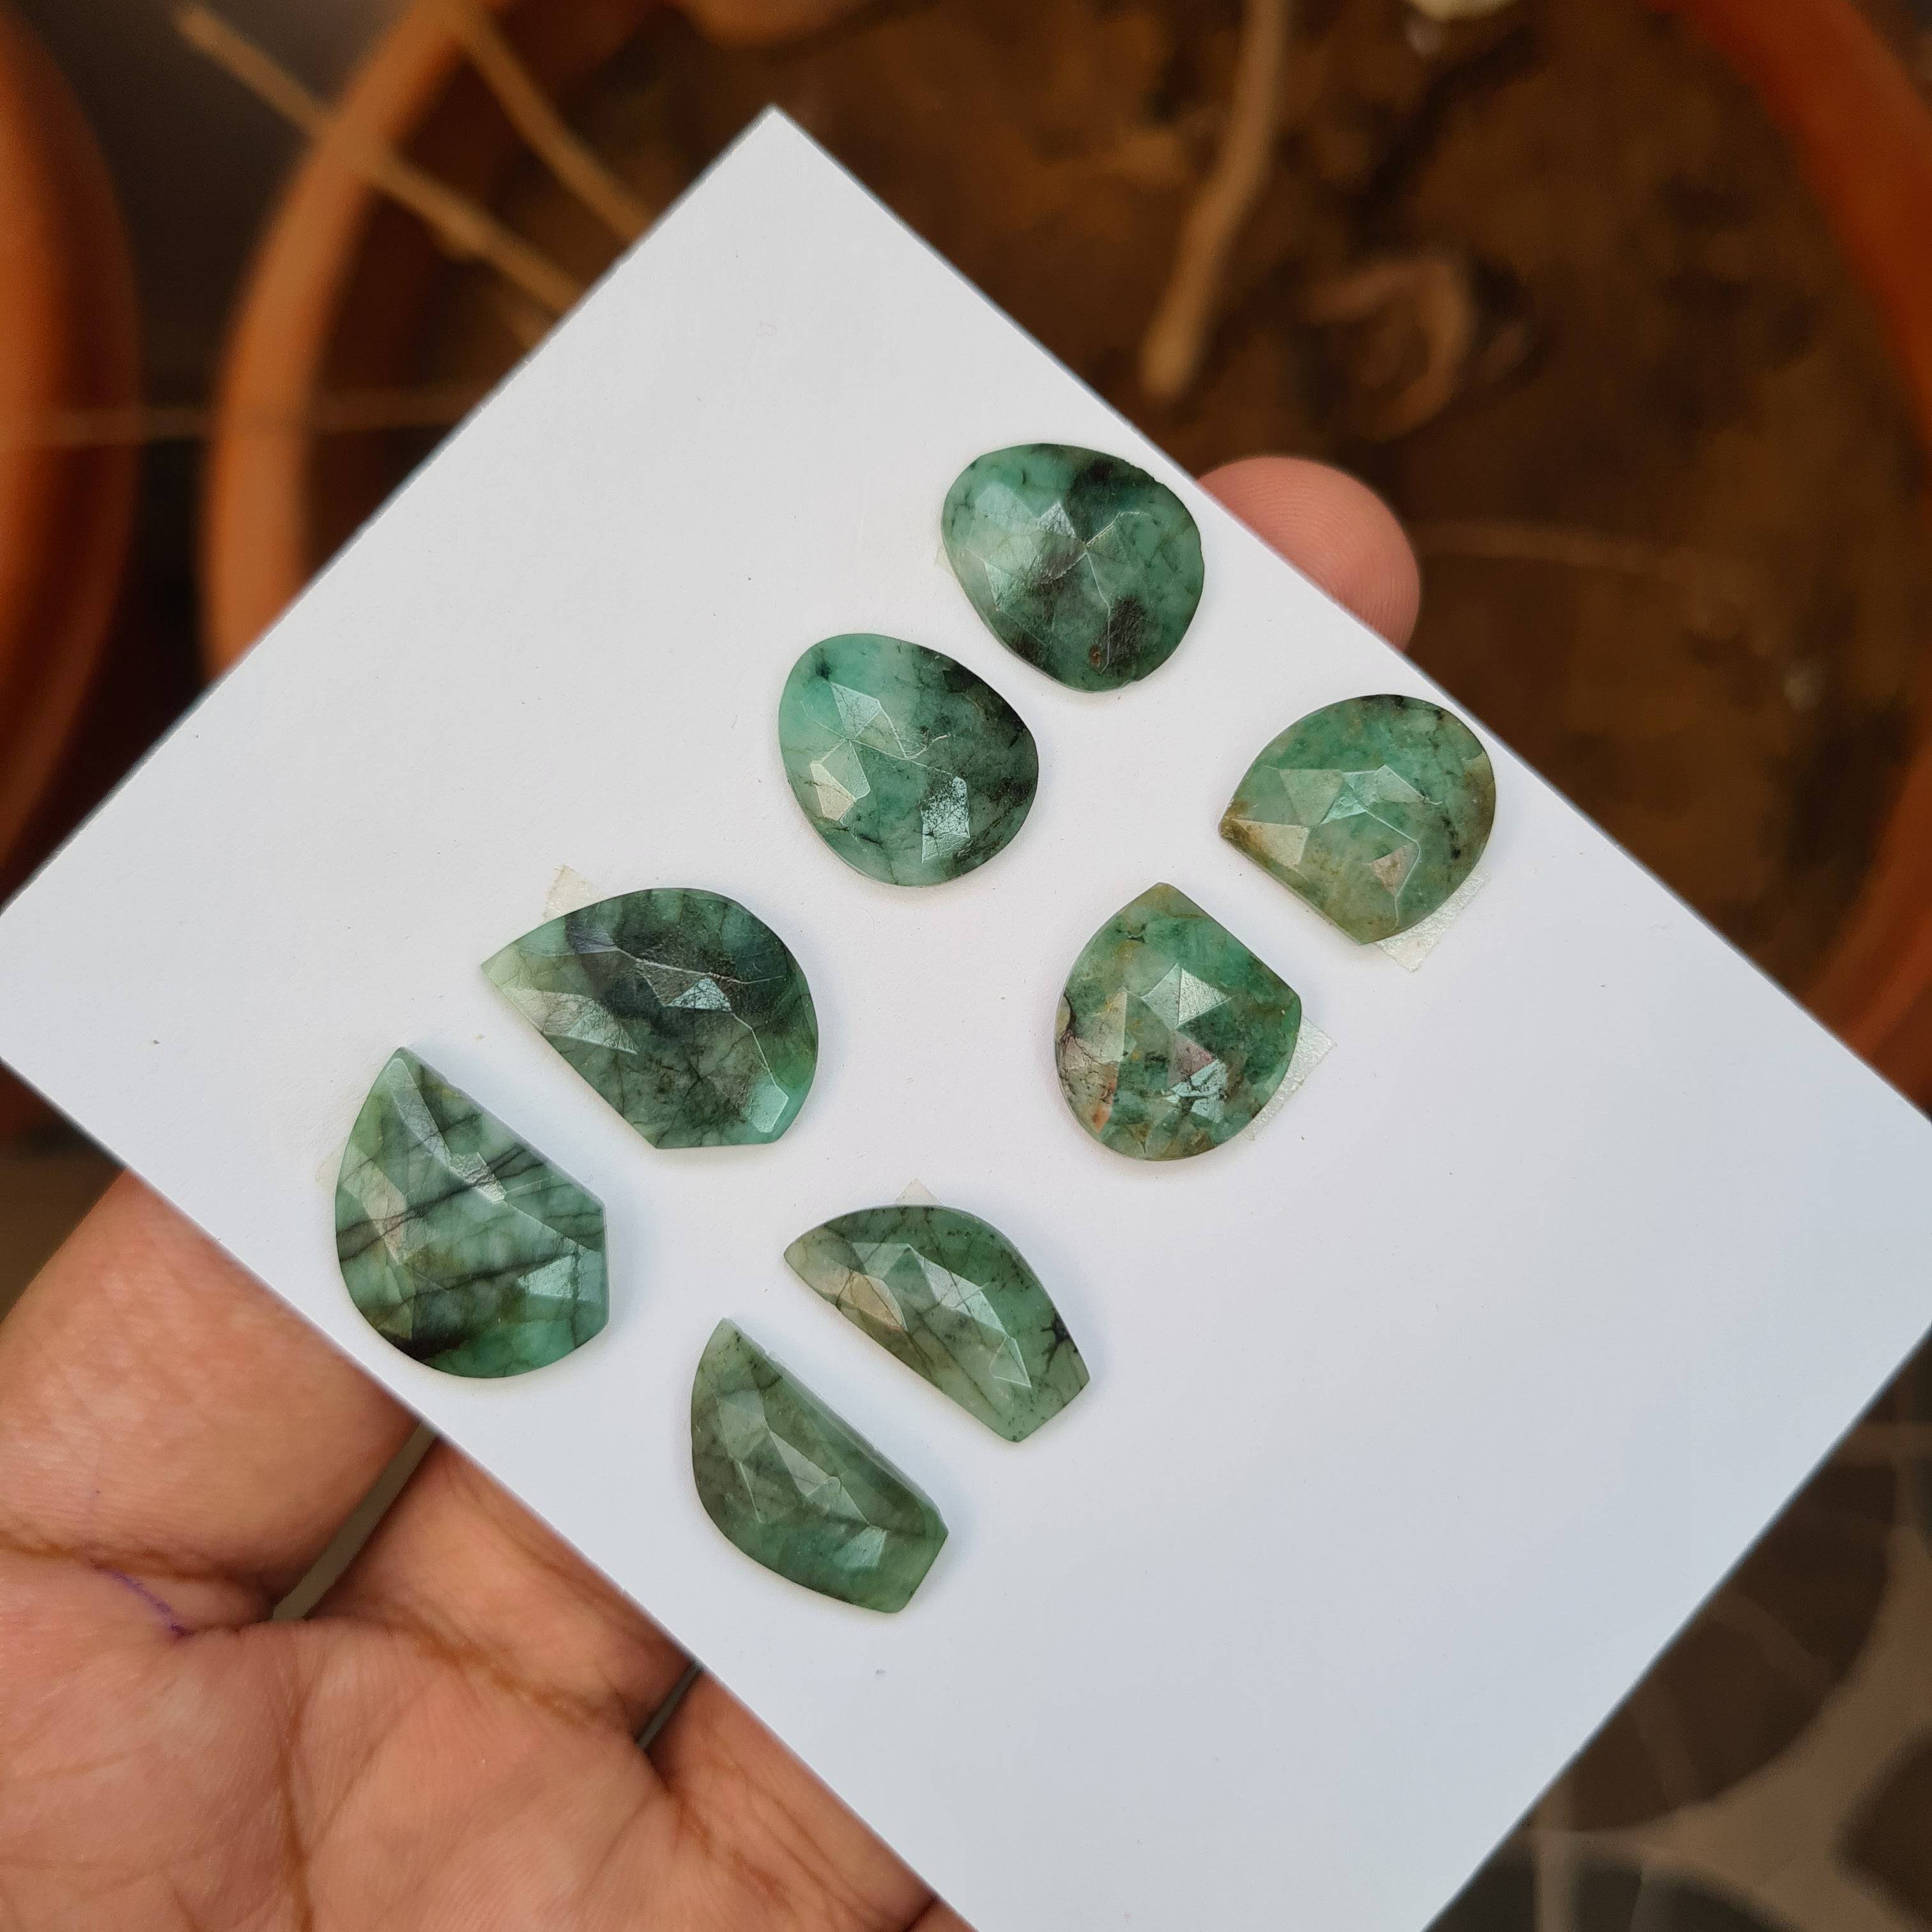 8 pcs Pcs Mozambique Natural Emerald Stone Pairs with Flat backs |Fancy shape13-19mm Size - The LabradoriteKing